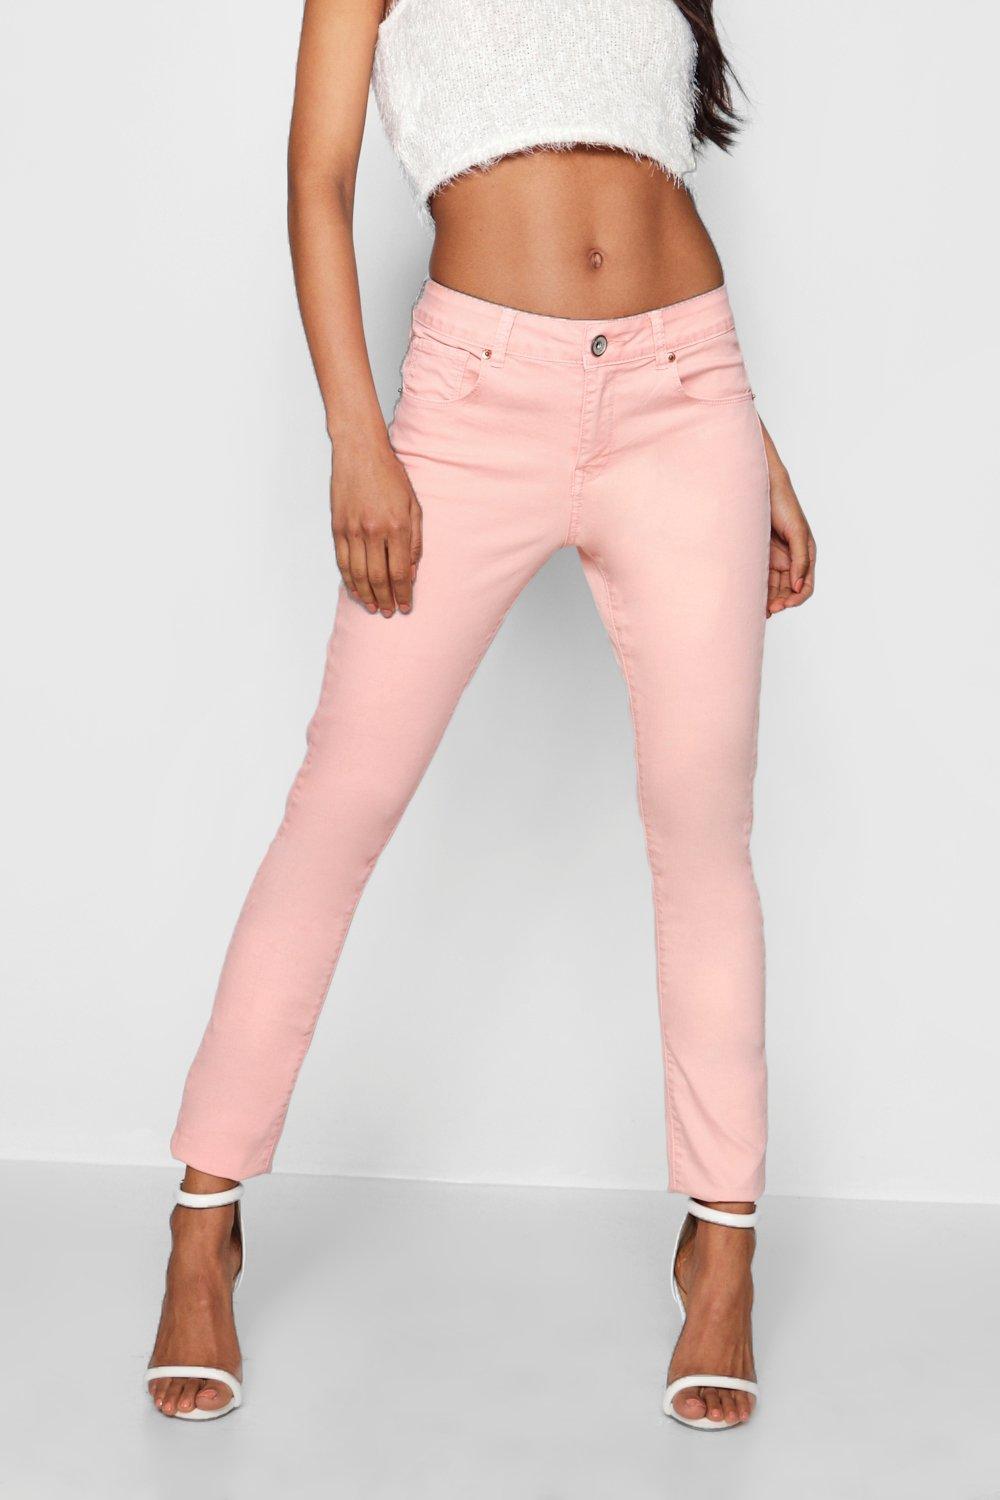 light pink jeans